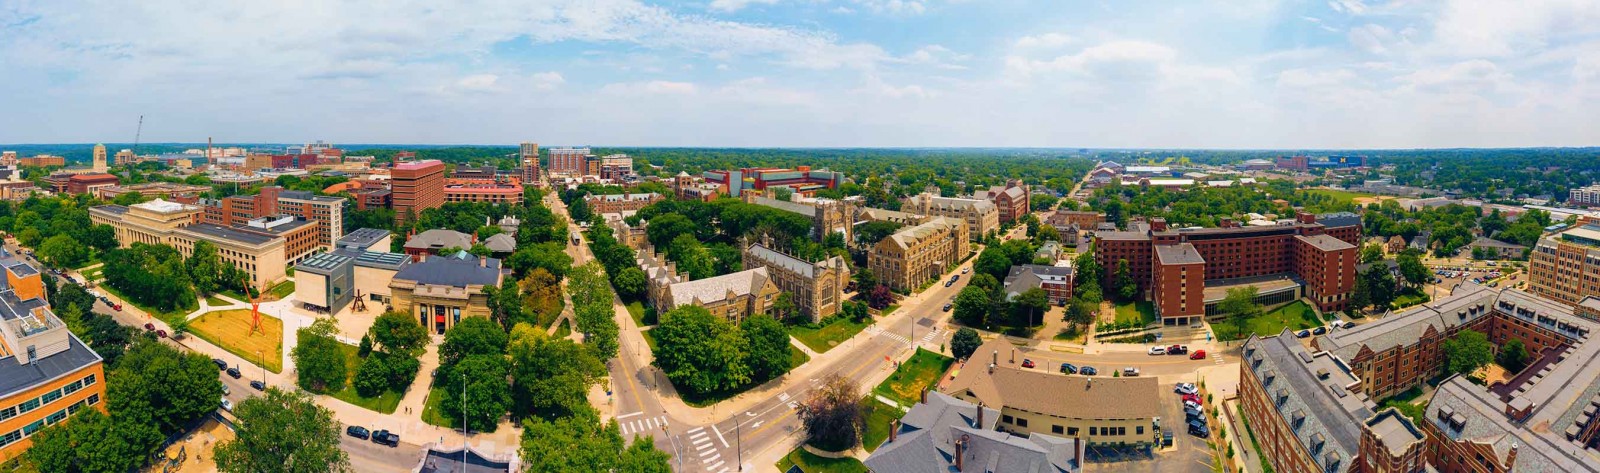 Aerial shot of University of Michigan Campus